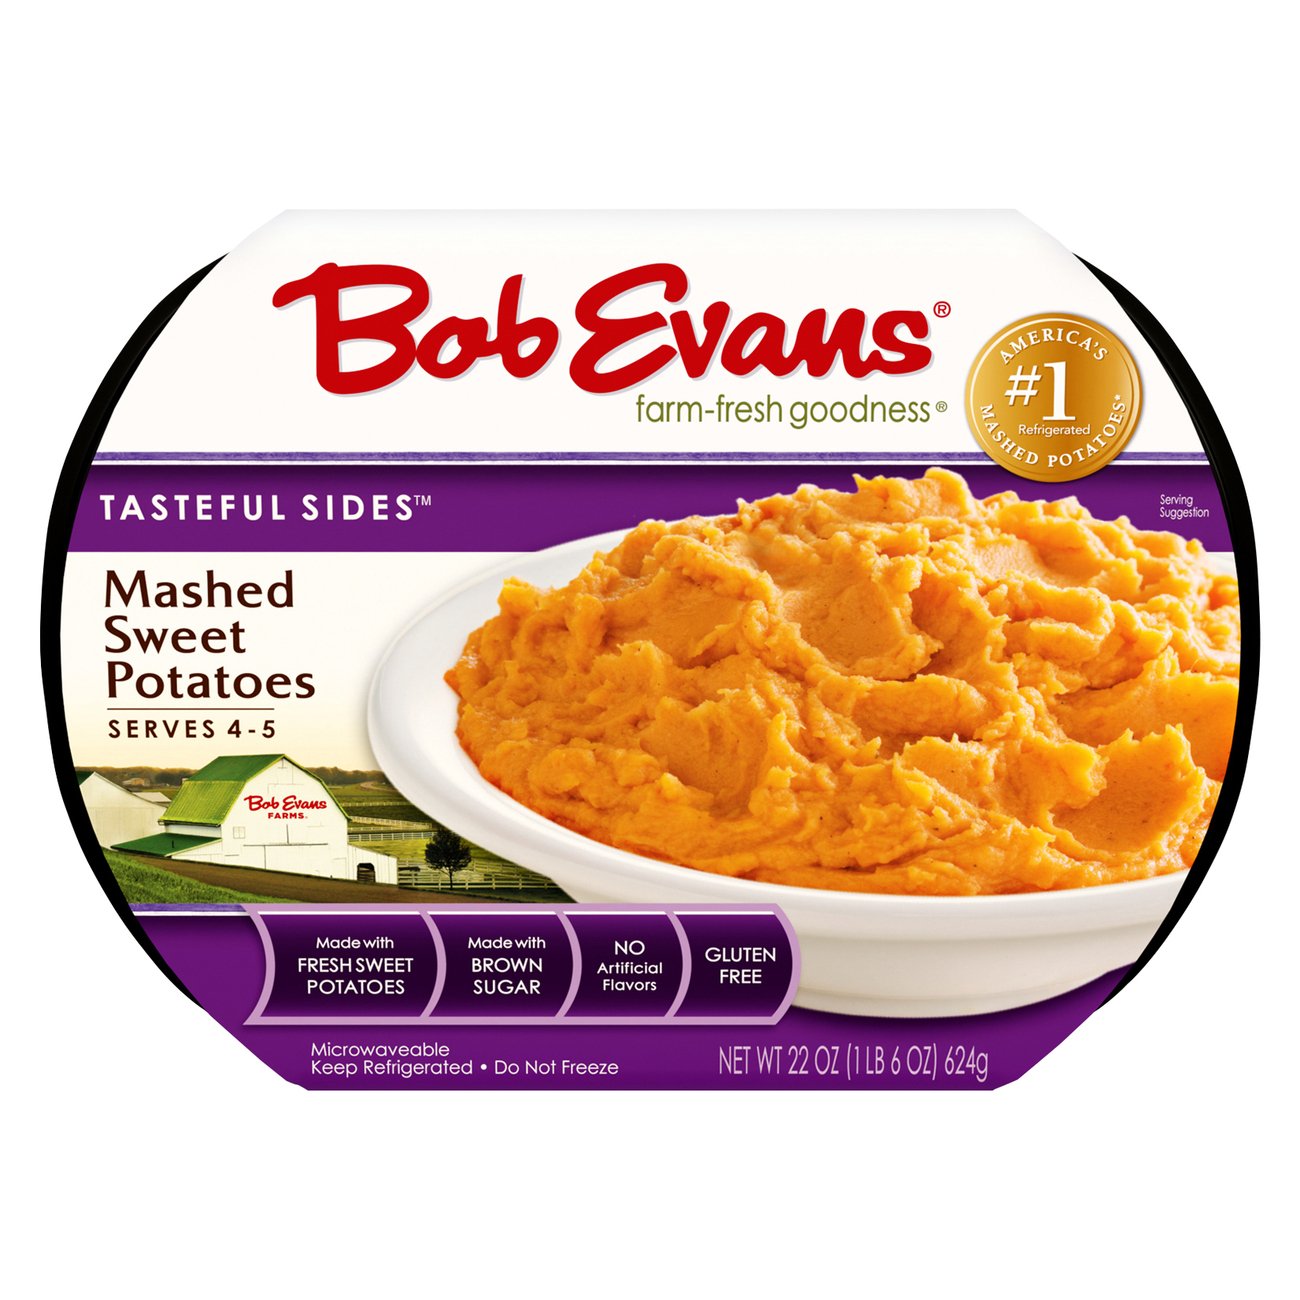 Bob Evans Mashed Sweet Potato - Shop Entrees & Sides at H-E-B